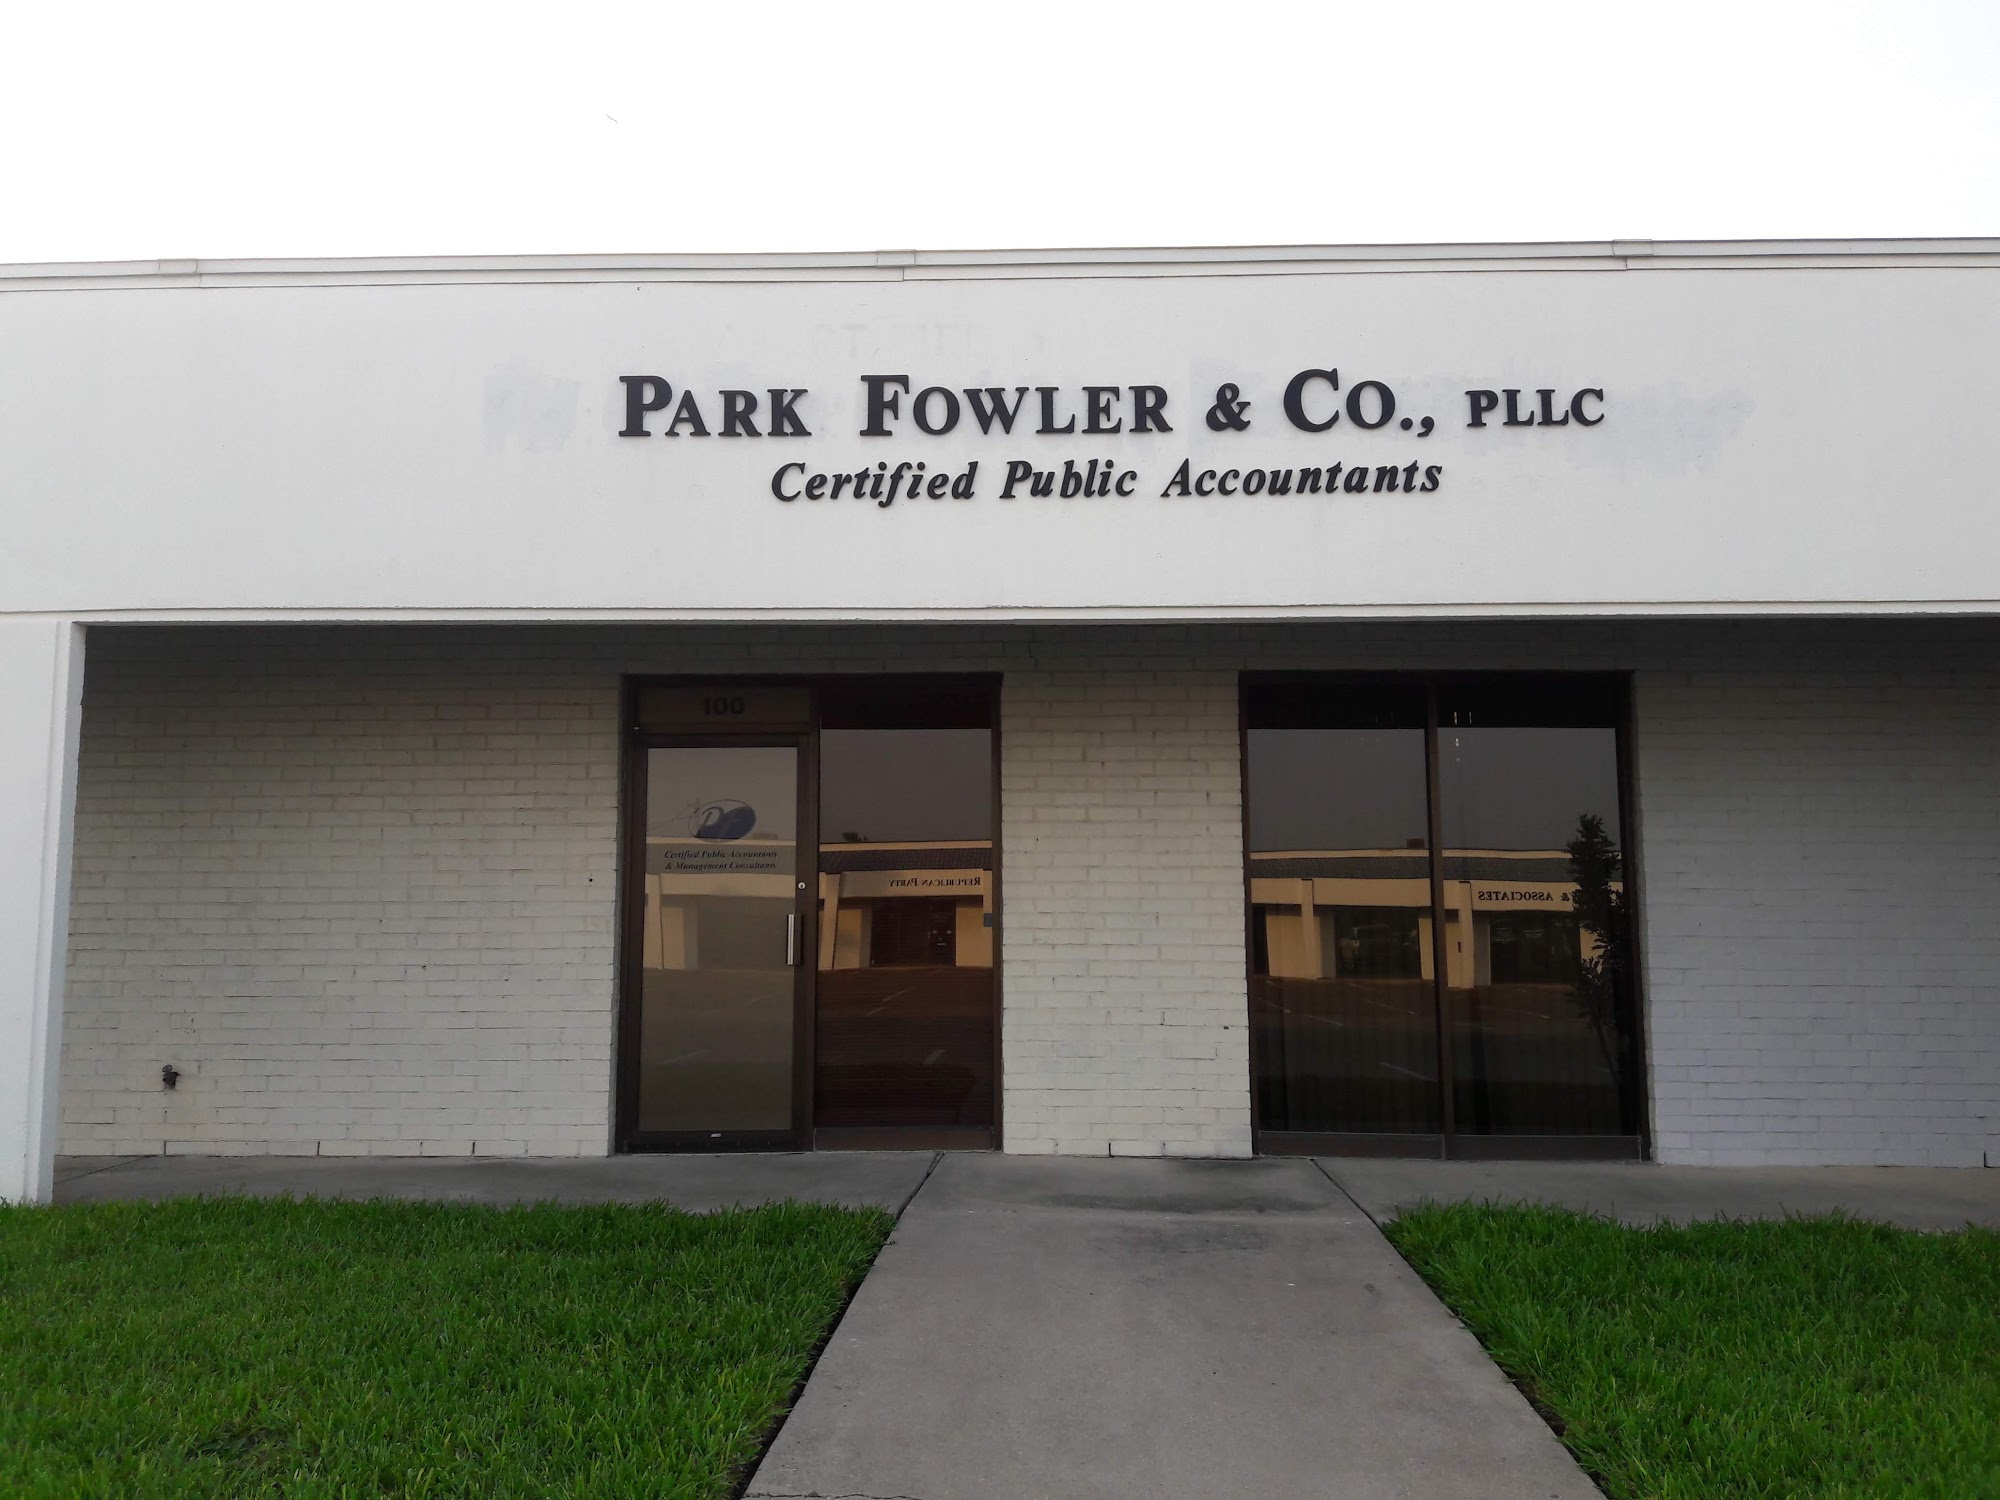 Park Fowler & Co., PLLC